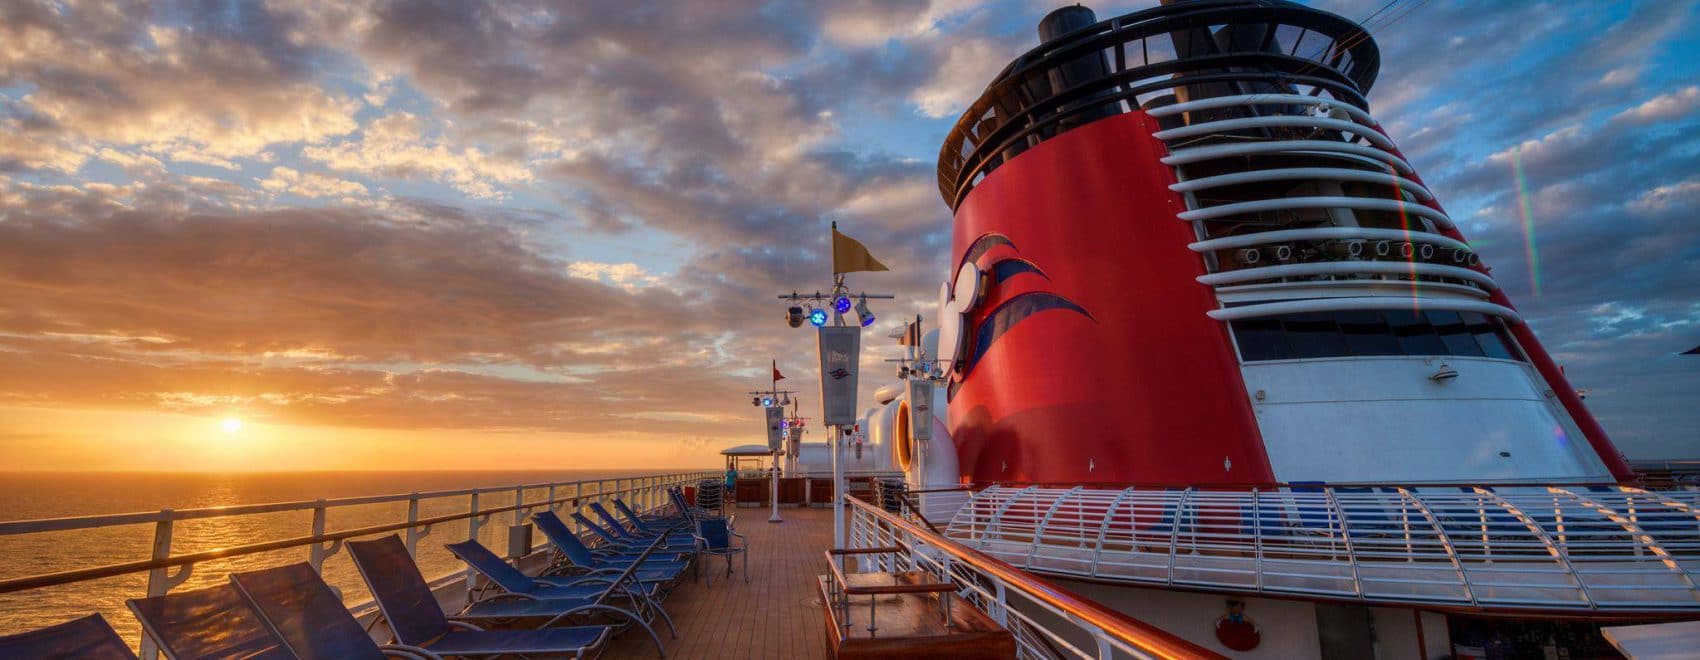 Cruise at sunset